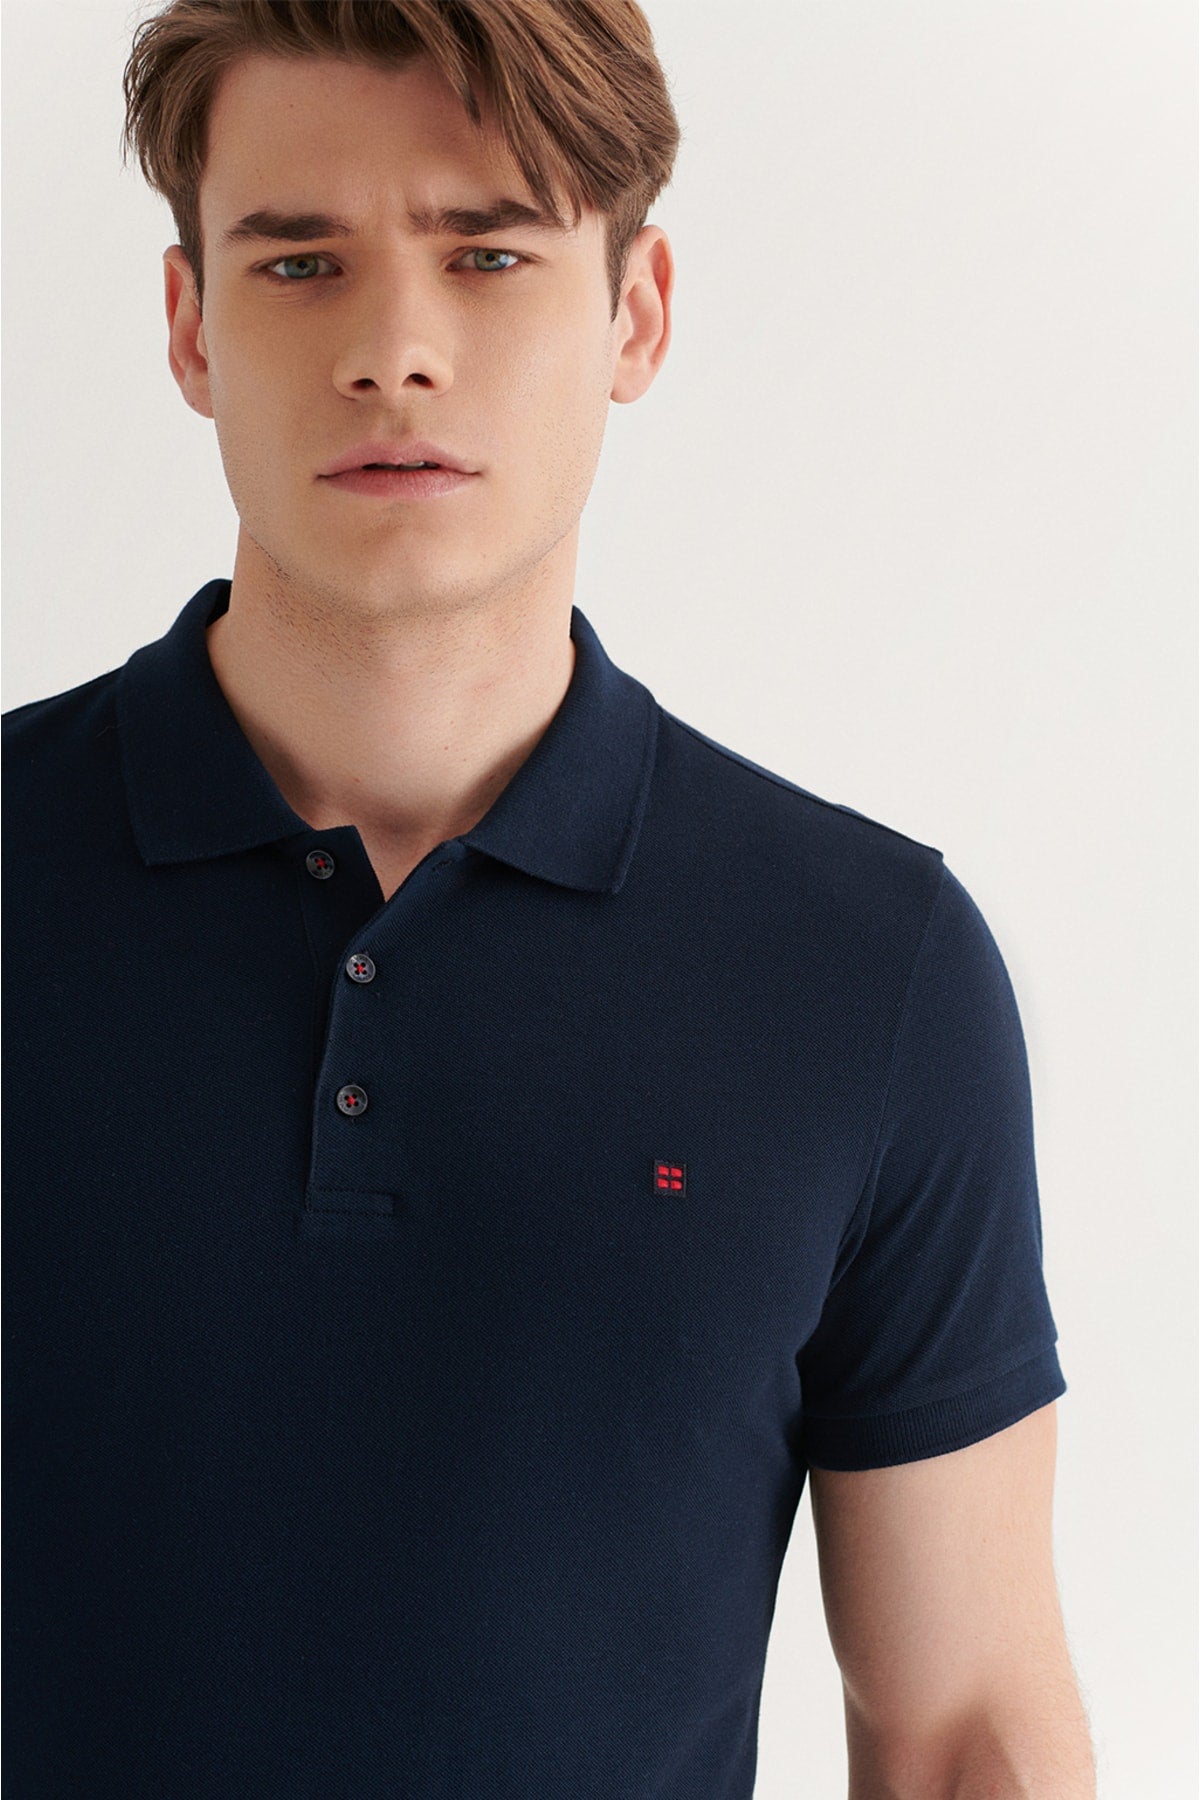 Men's Navy Blue 100% Cotton Breathable Standard Fit Normal Cut Polo Neck T-shirt E001004